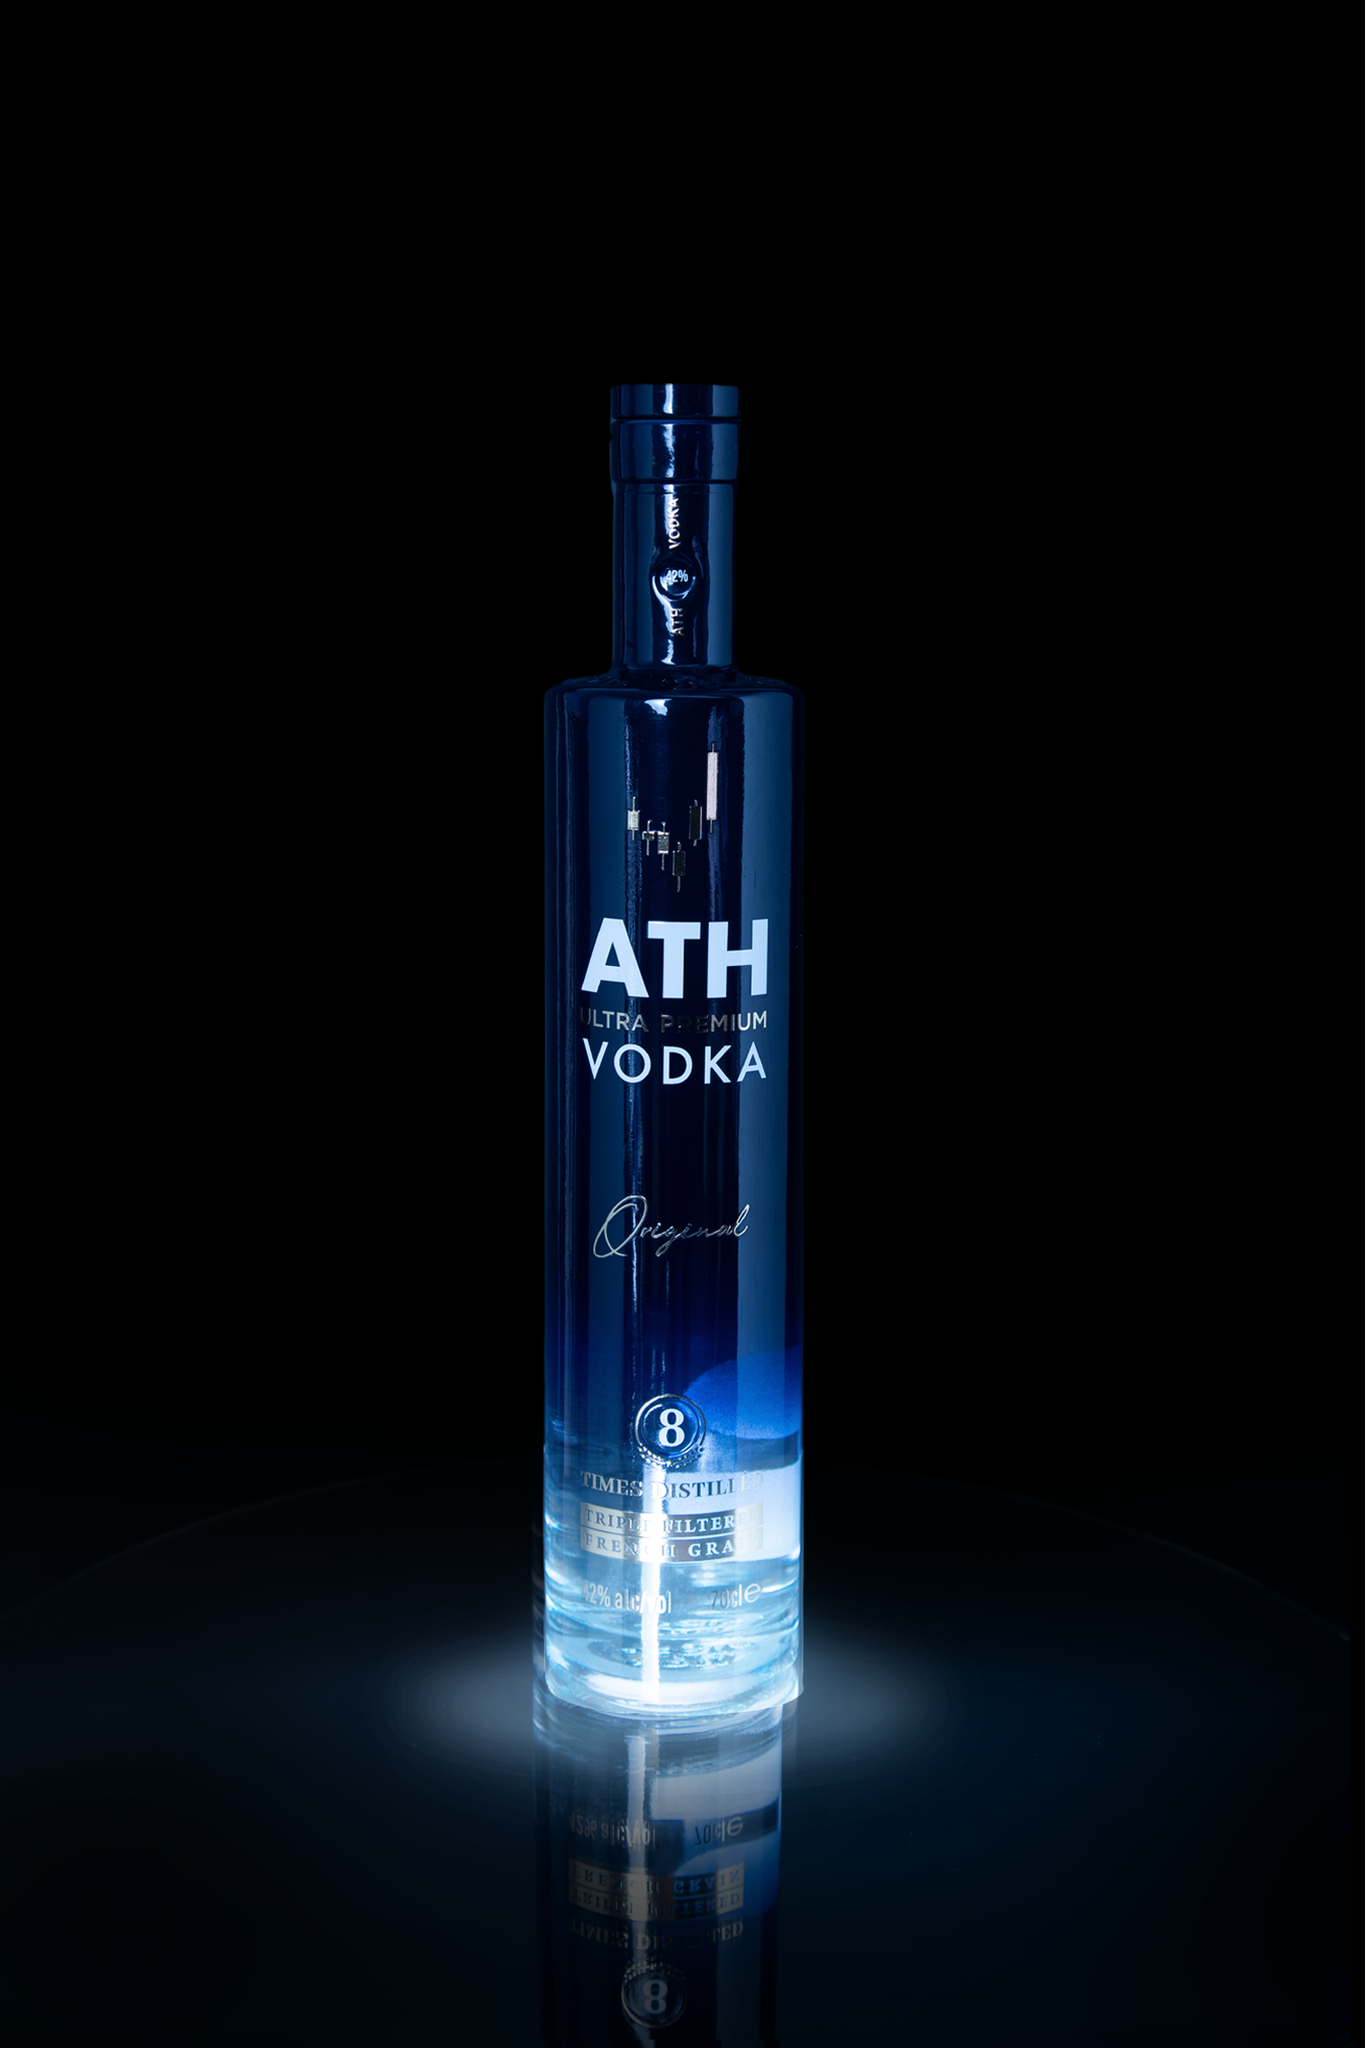 ATH Vodka - Original